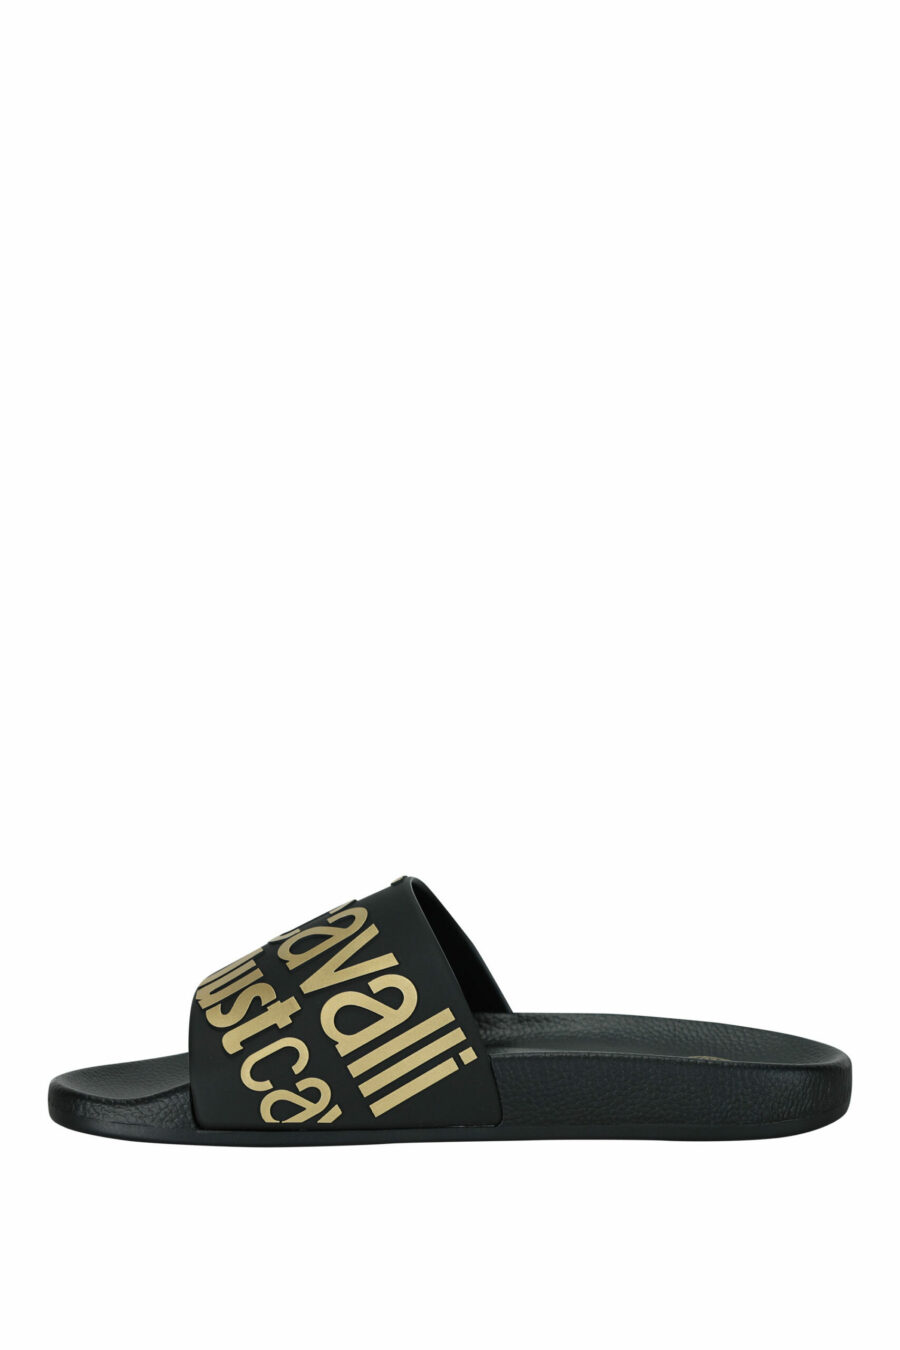 Schwarze Flip Flops mit goldenem "all over logo just cavalli" Maxilogo - 8052672697158 2 skaliert